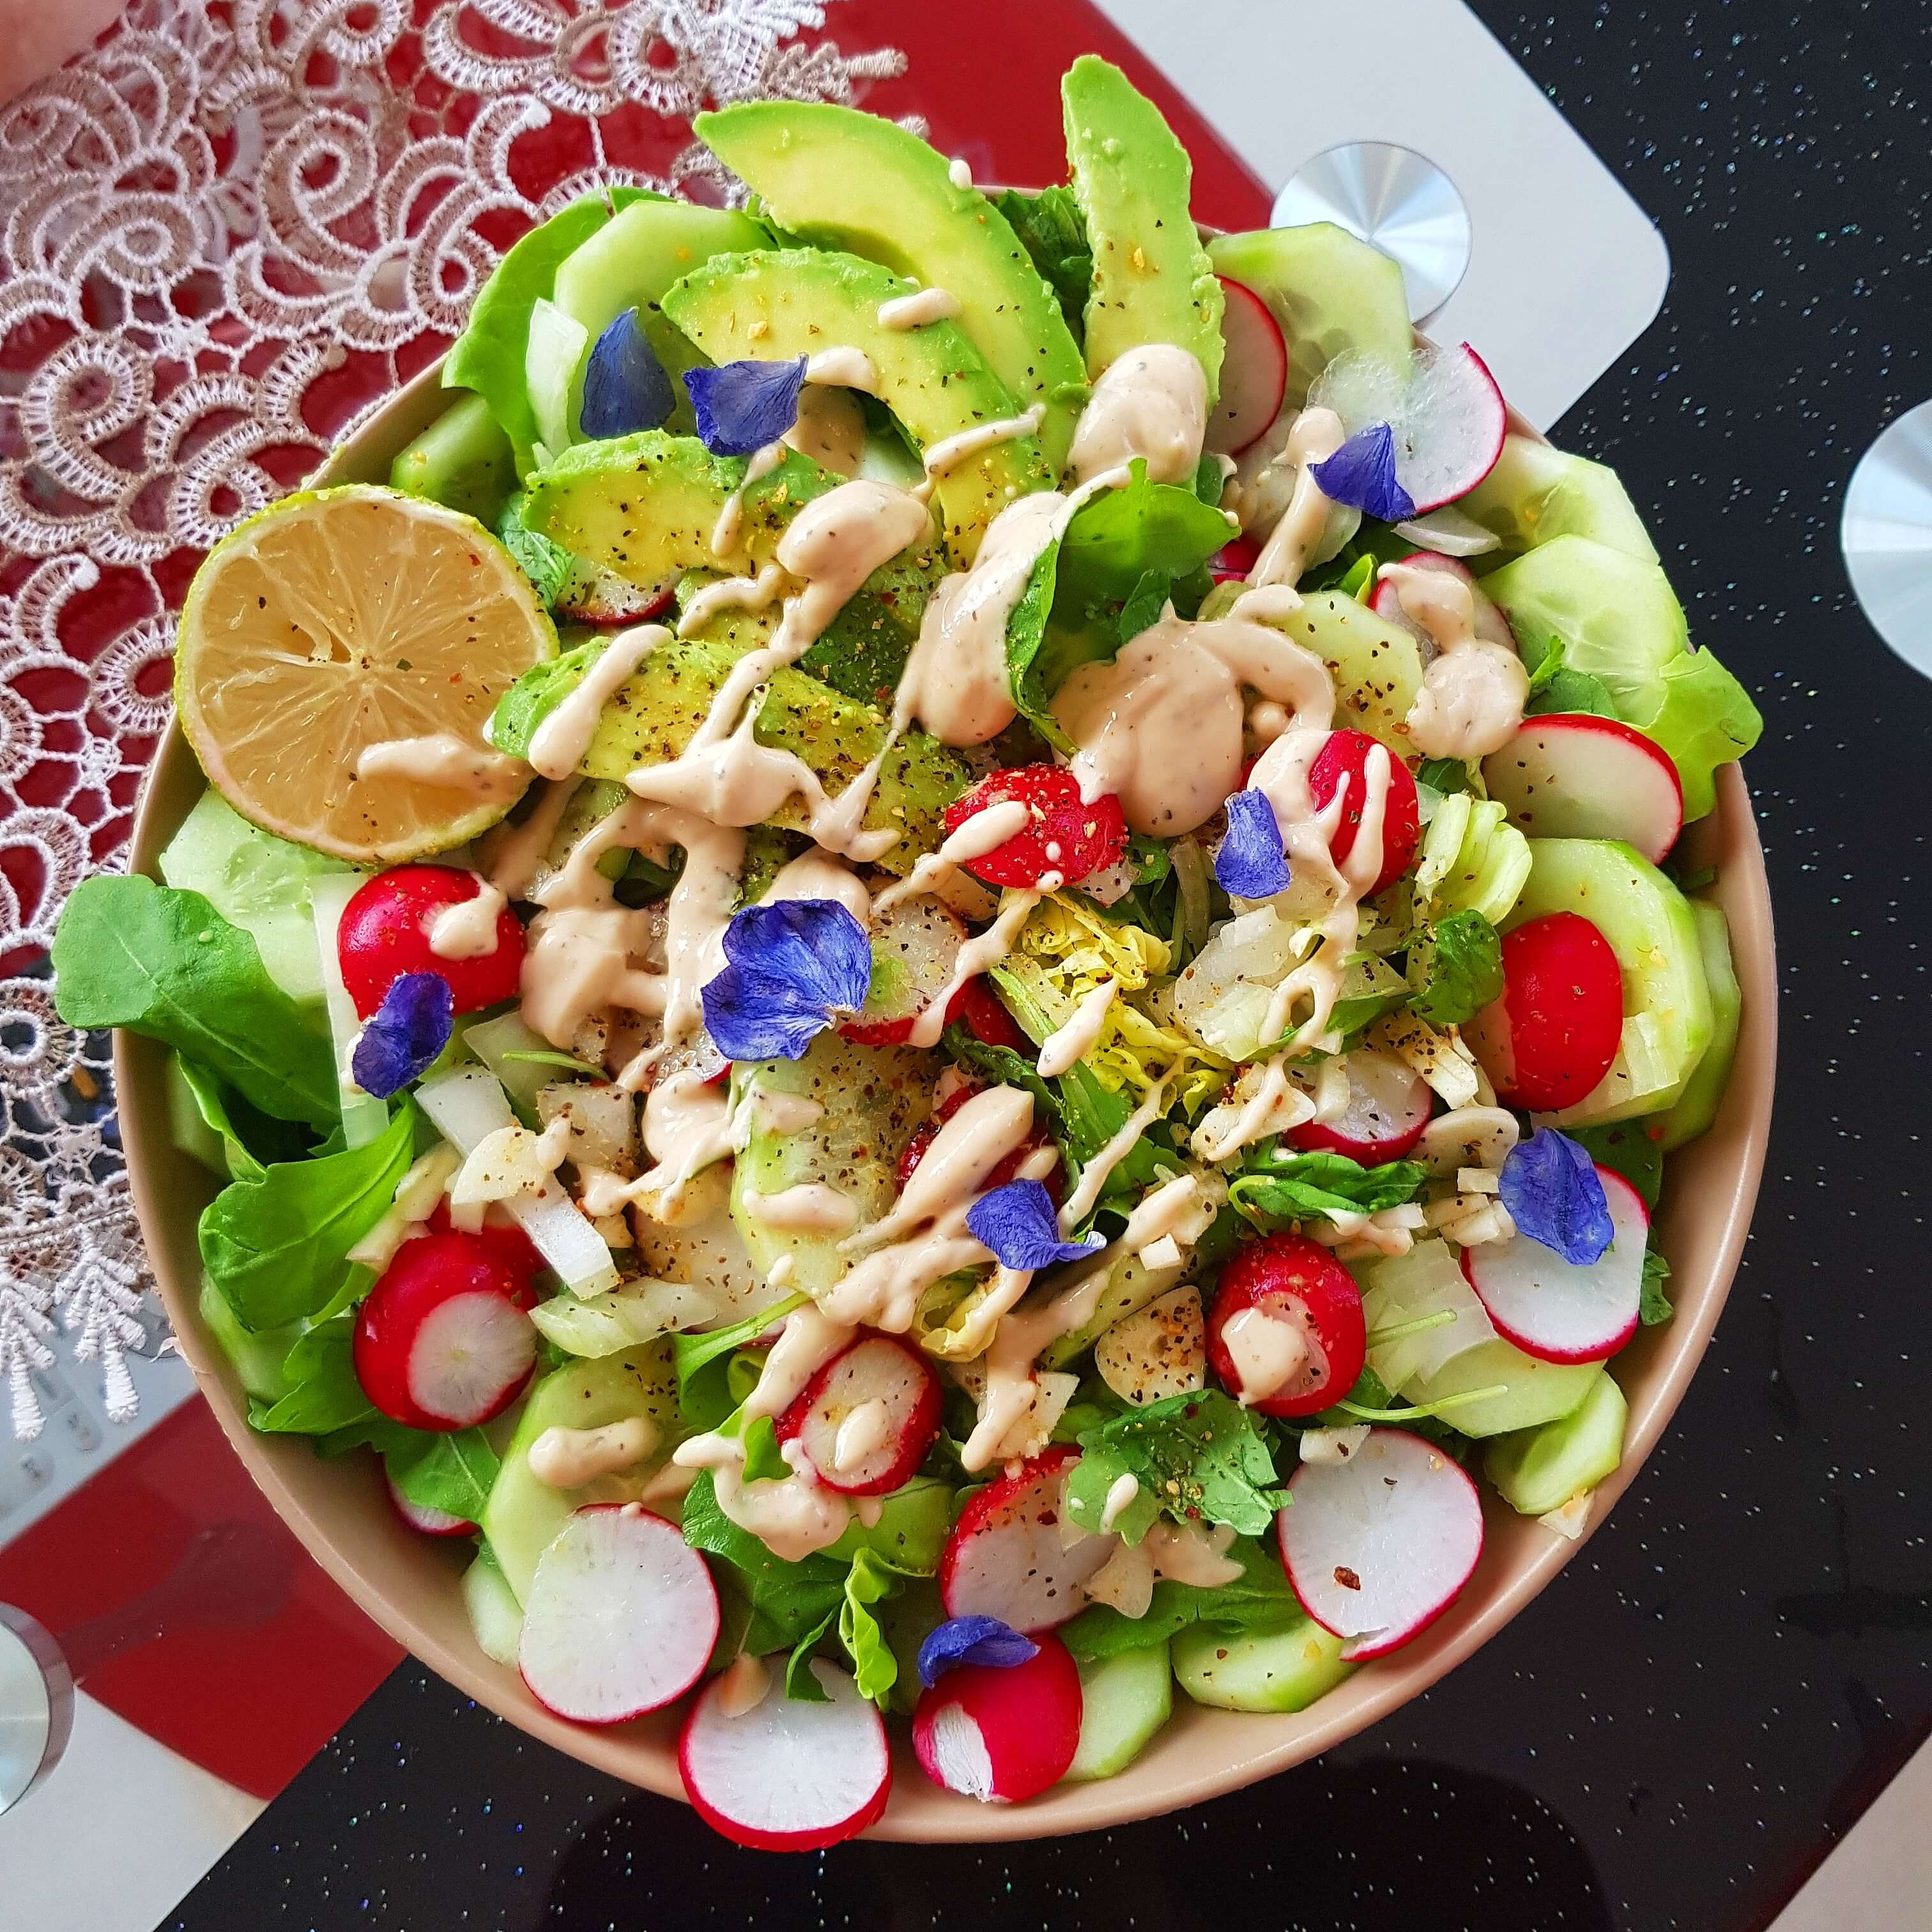 Green salad with radish